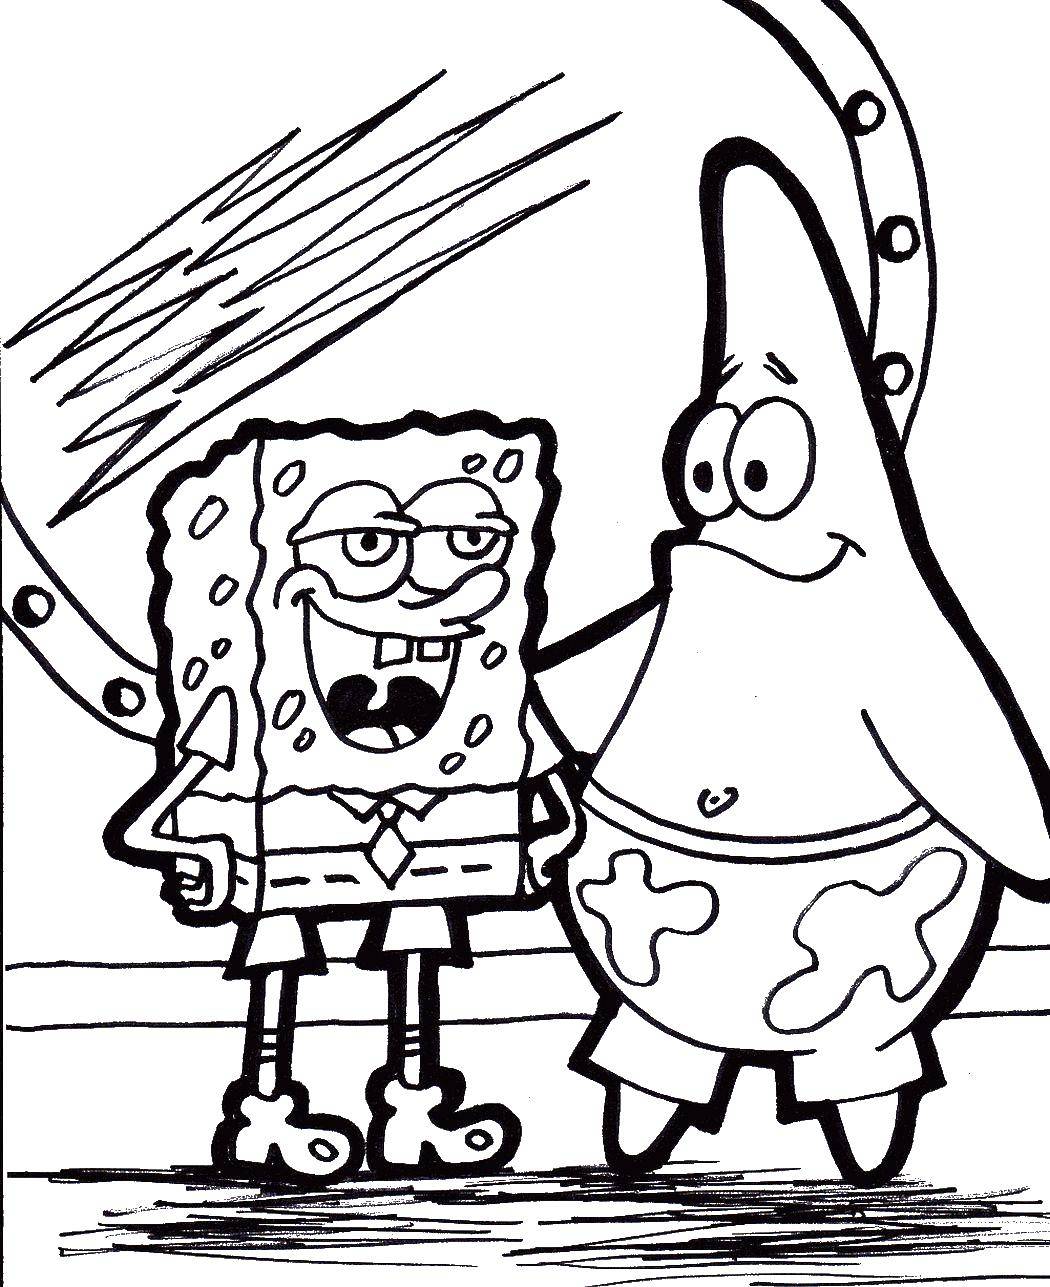 Coloring Spongebob and Patrick. Category Spongebob. Tags:  the spongebob, Patrick.